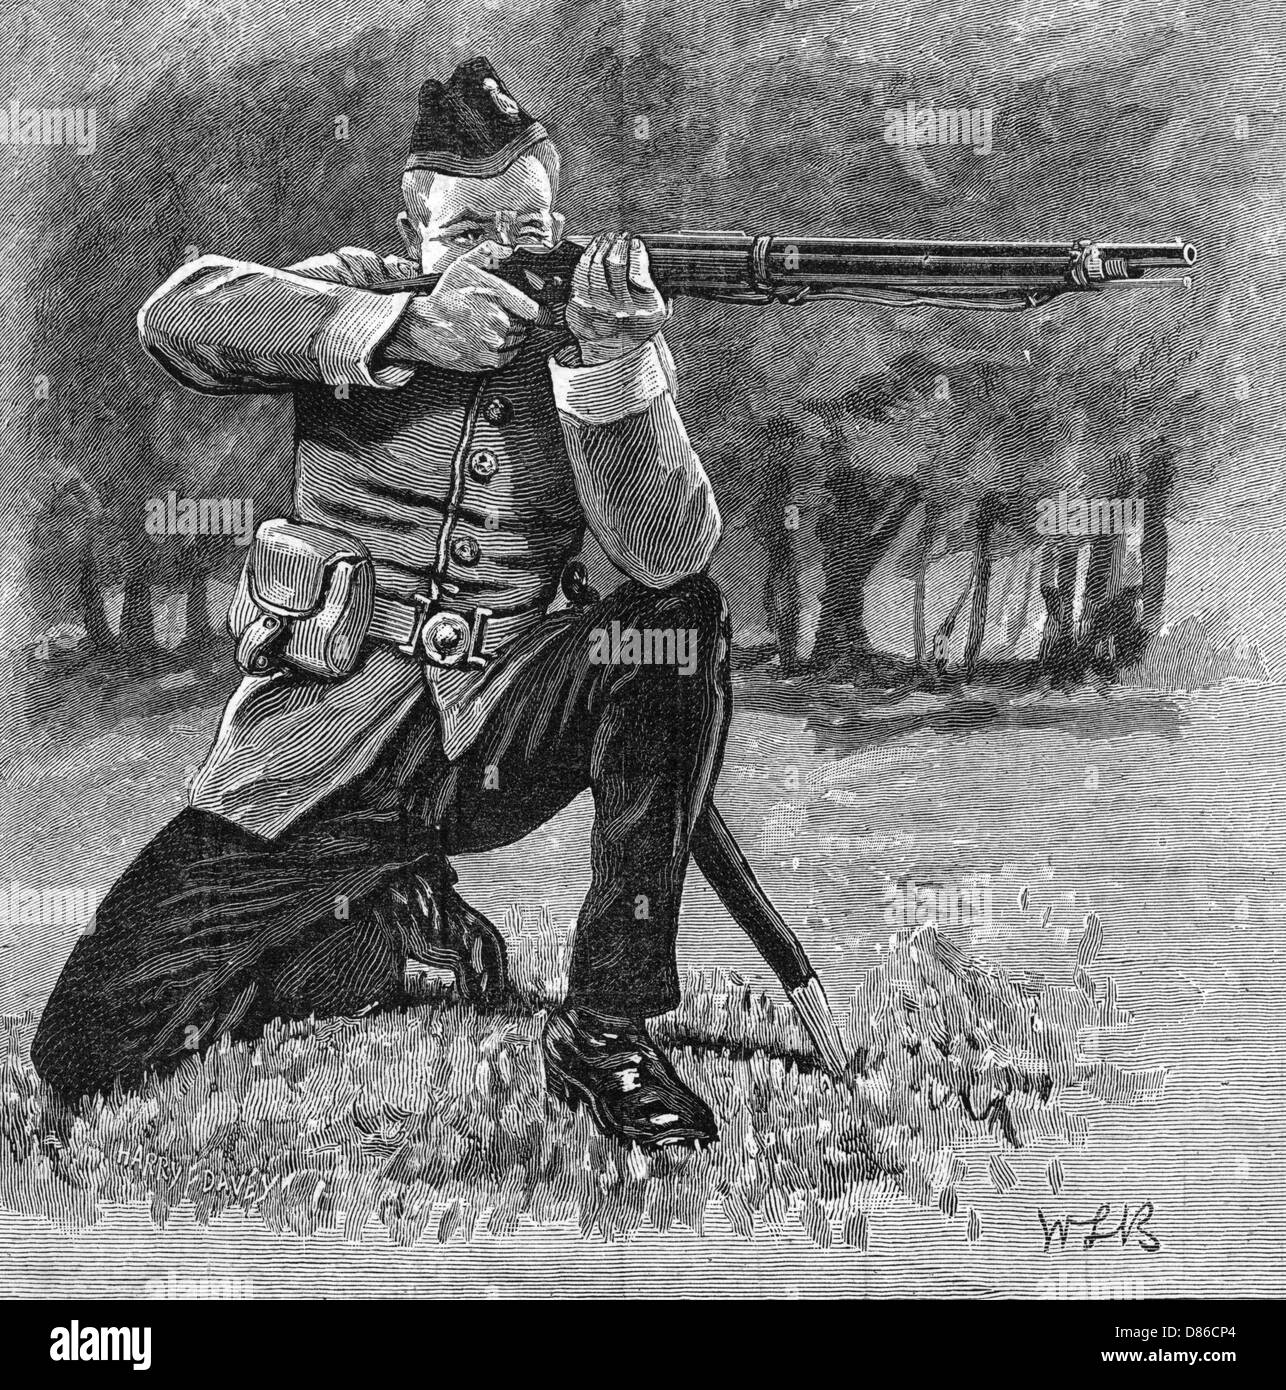 Posición arrodillada Rifle 1892 Foto de stock